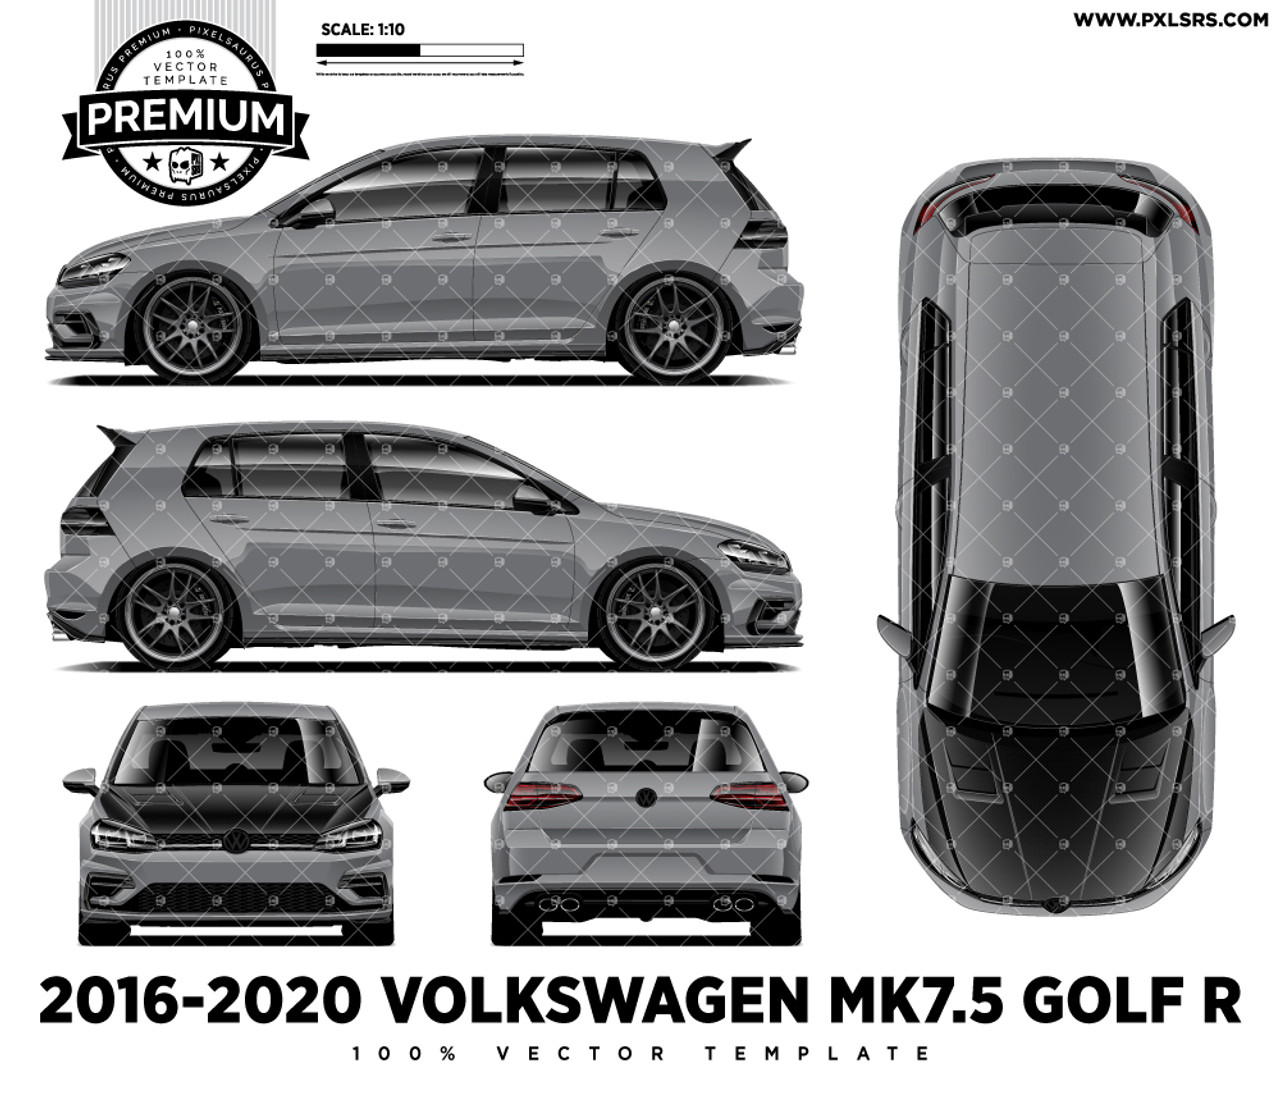 2016-2020 Volkswagen MK7.5 Golf R - Full 'Premium' Vector Template ...